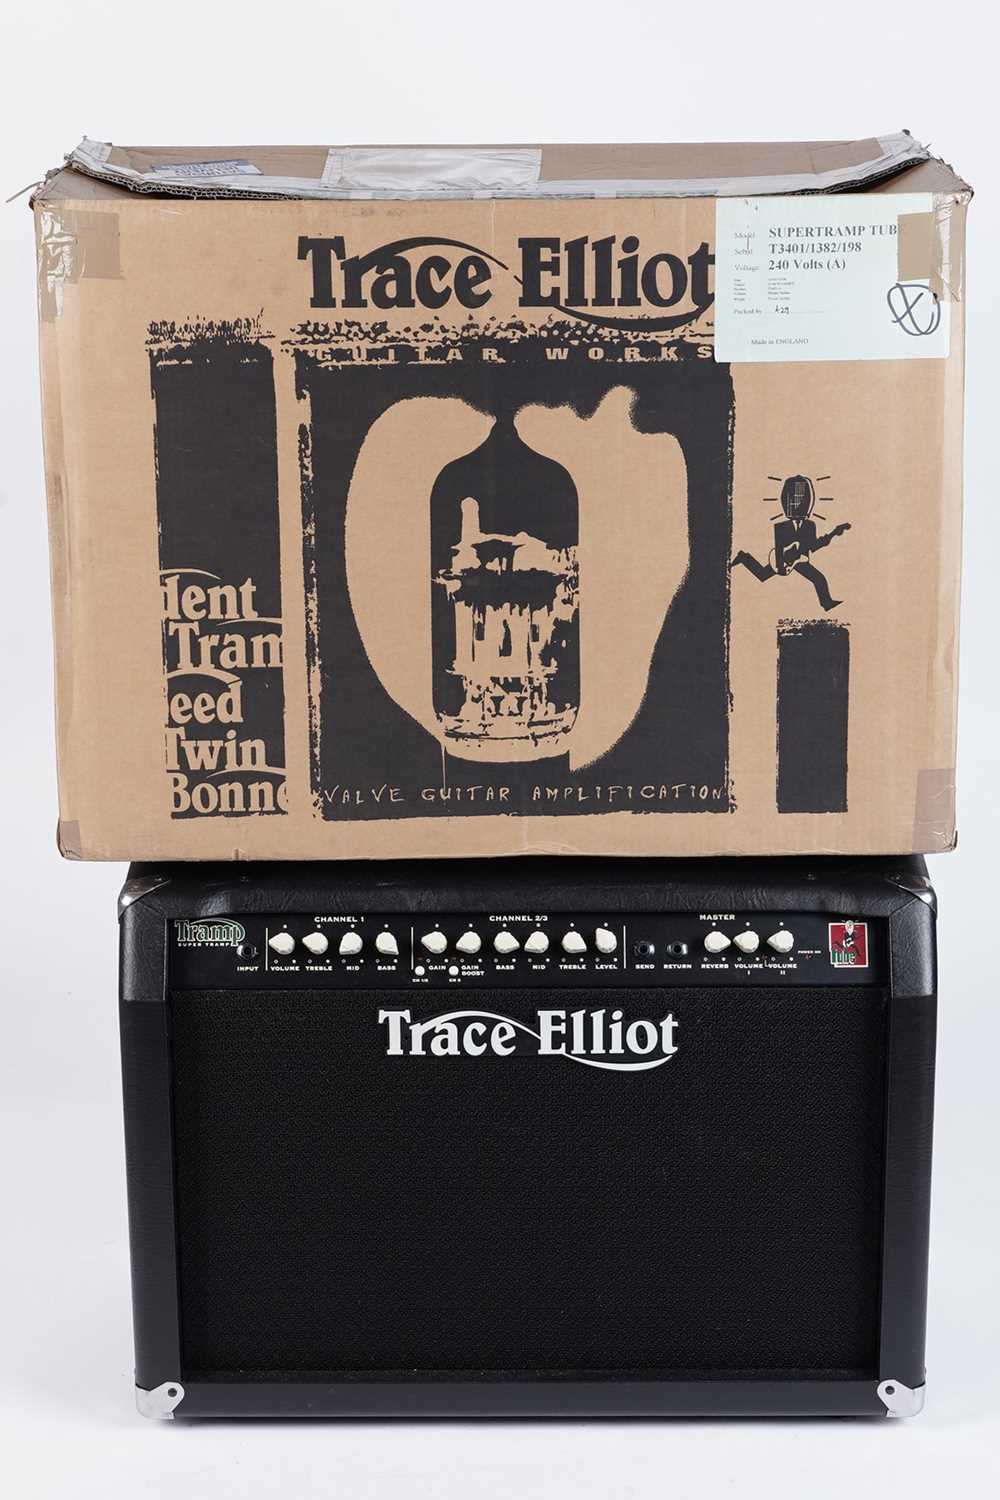 A Trace Elliot Super Tramp Tube 100 watt guitar amplifier - Image 2 of 4